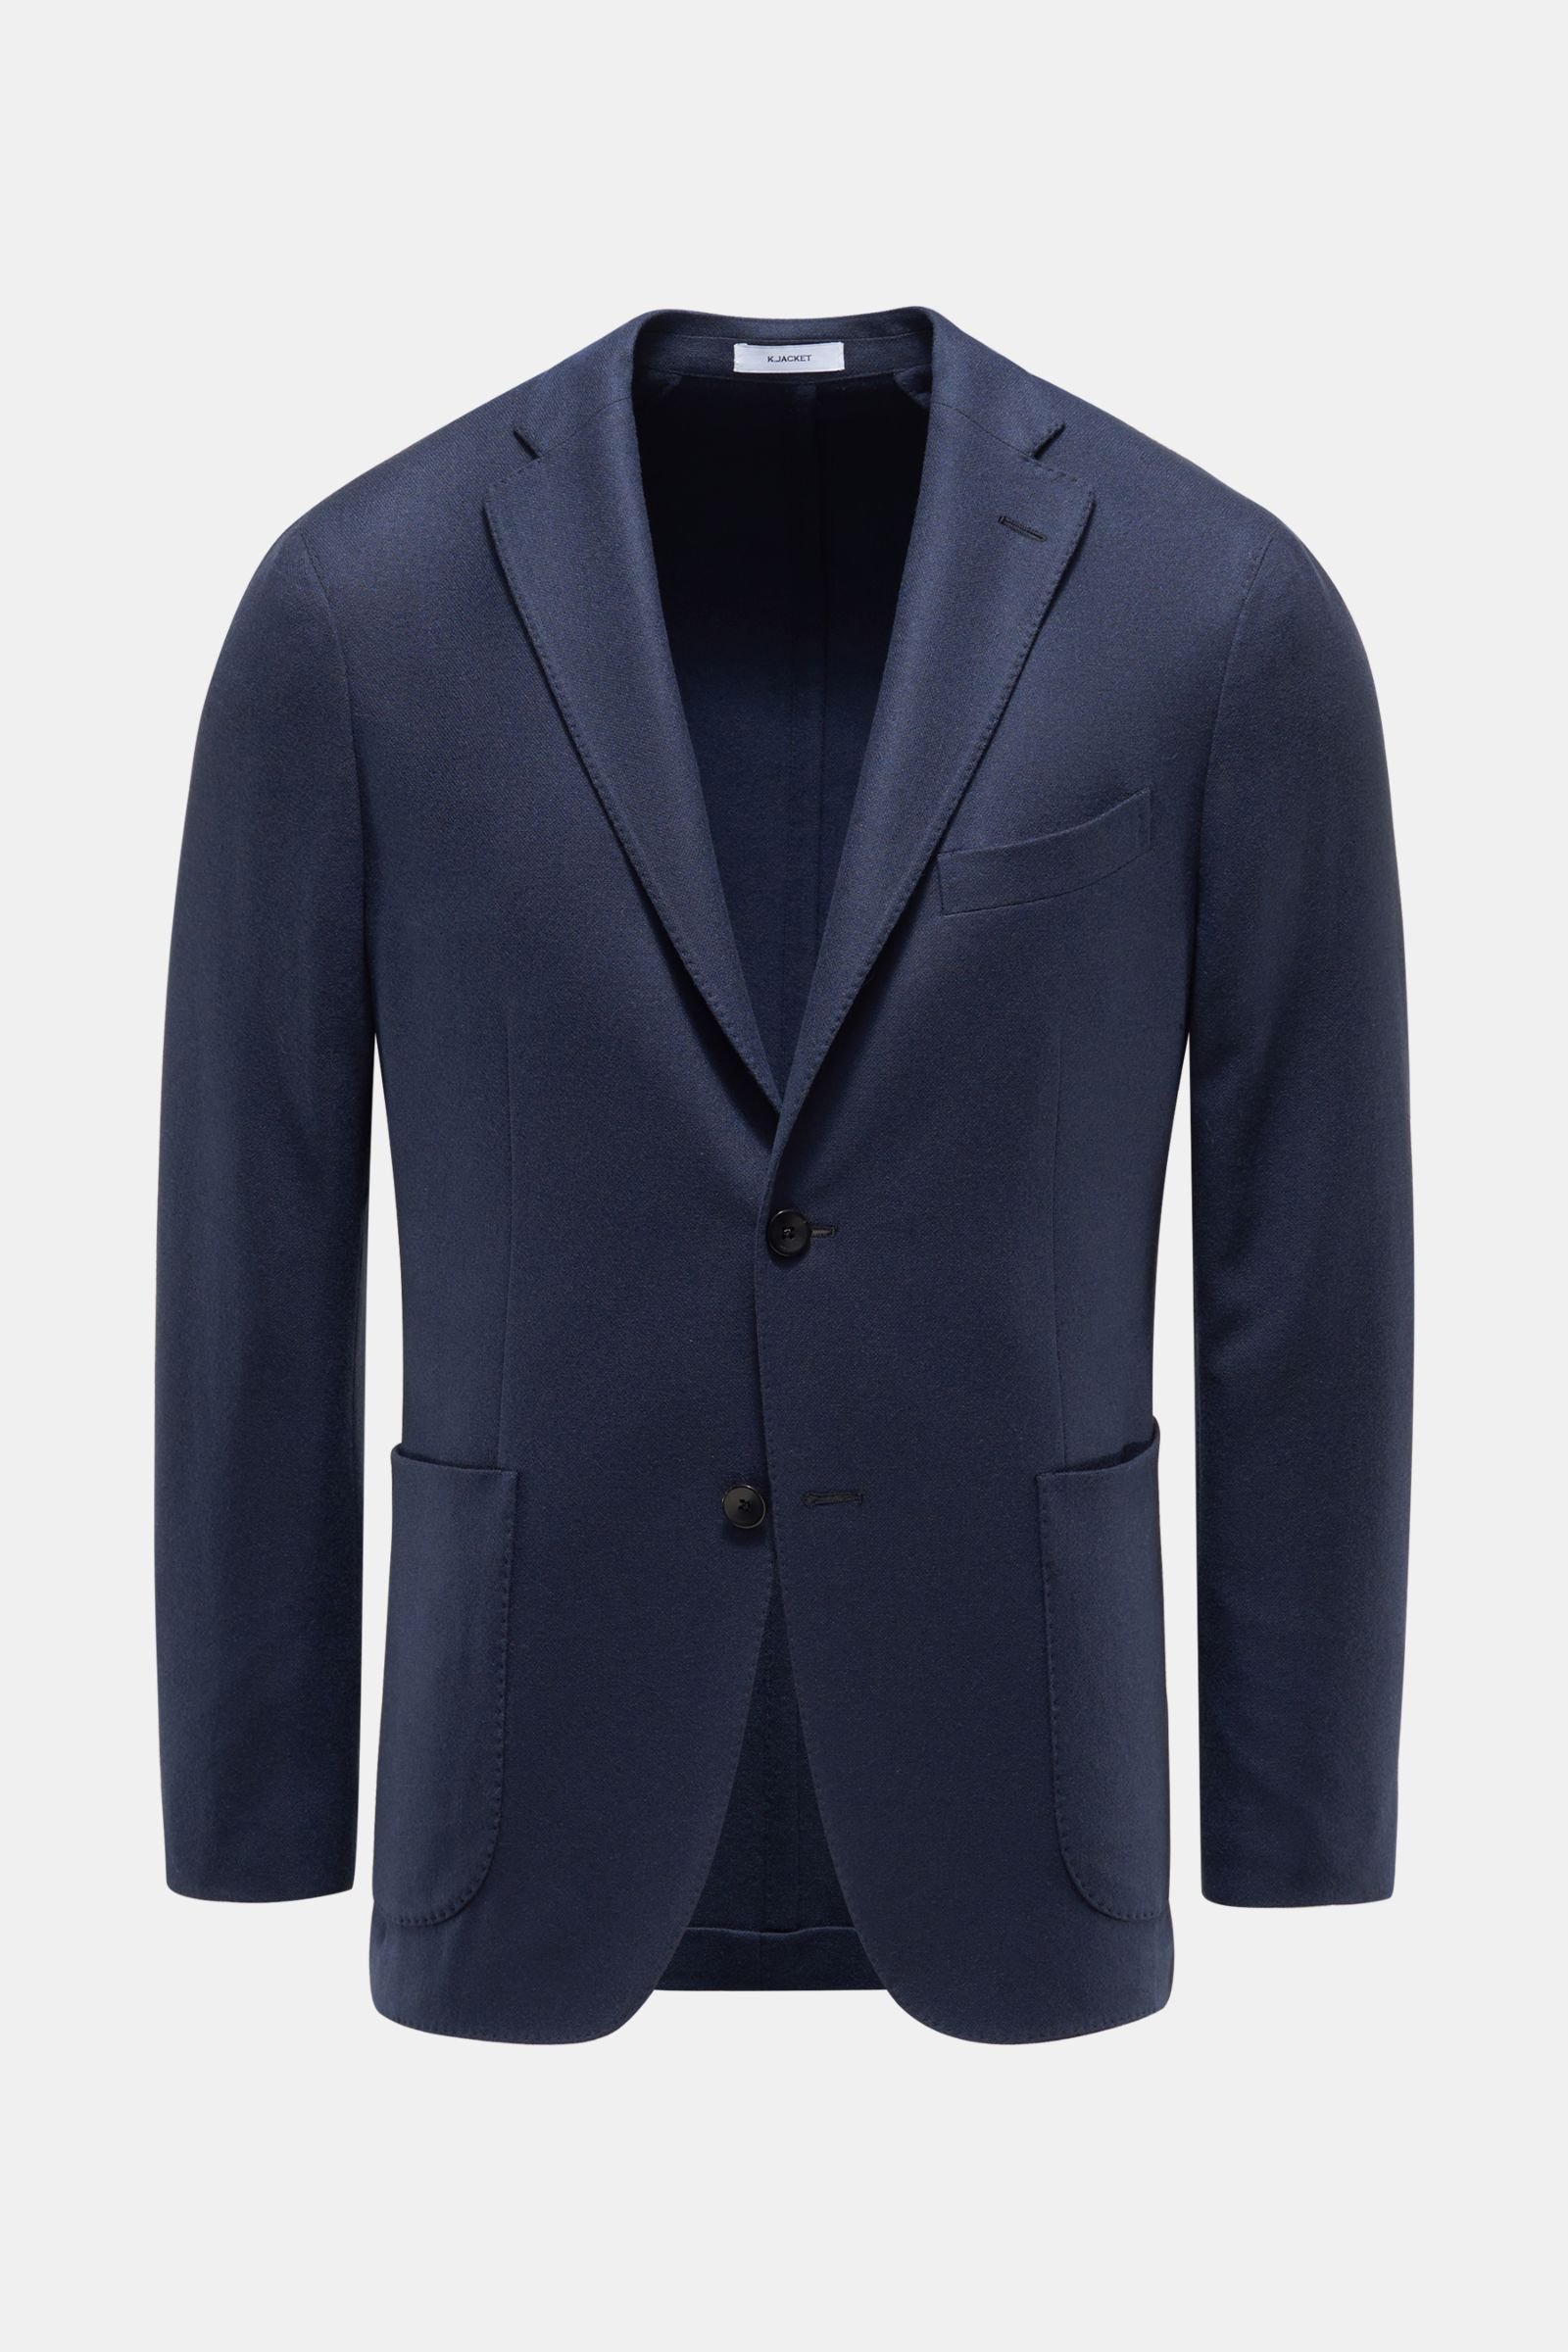 Cashmere smart-casual jacket 'K. Jacket' navy